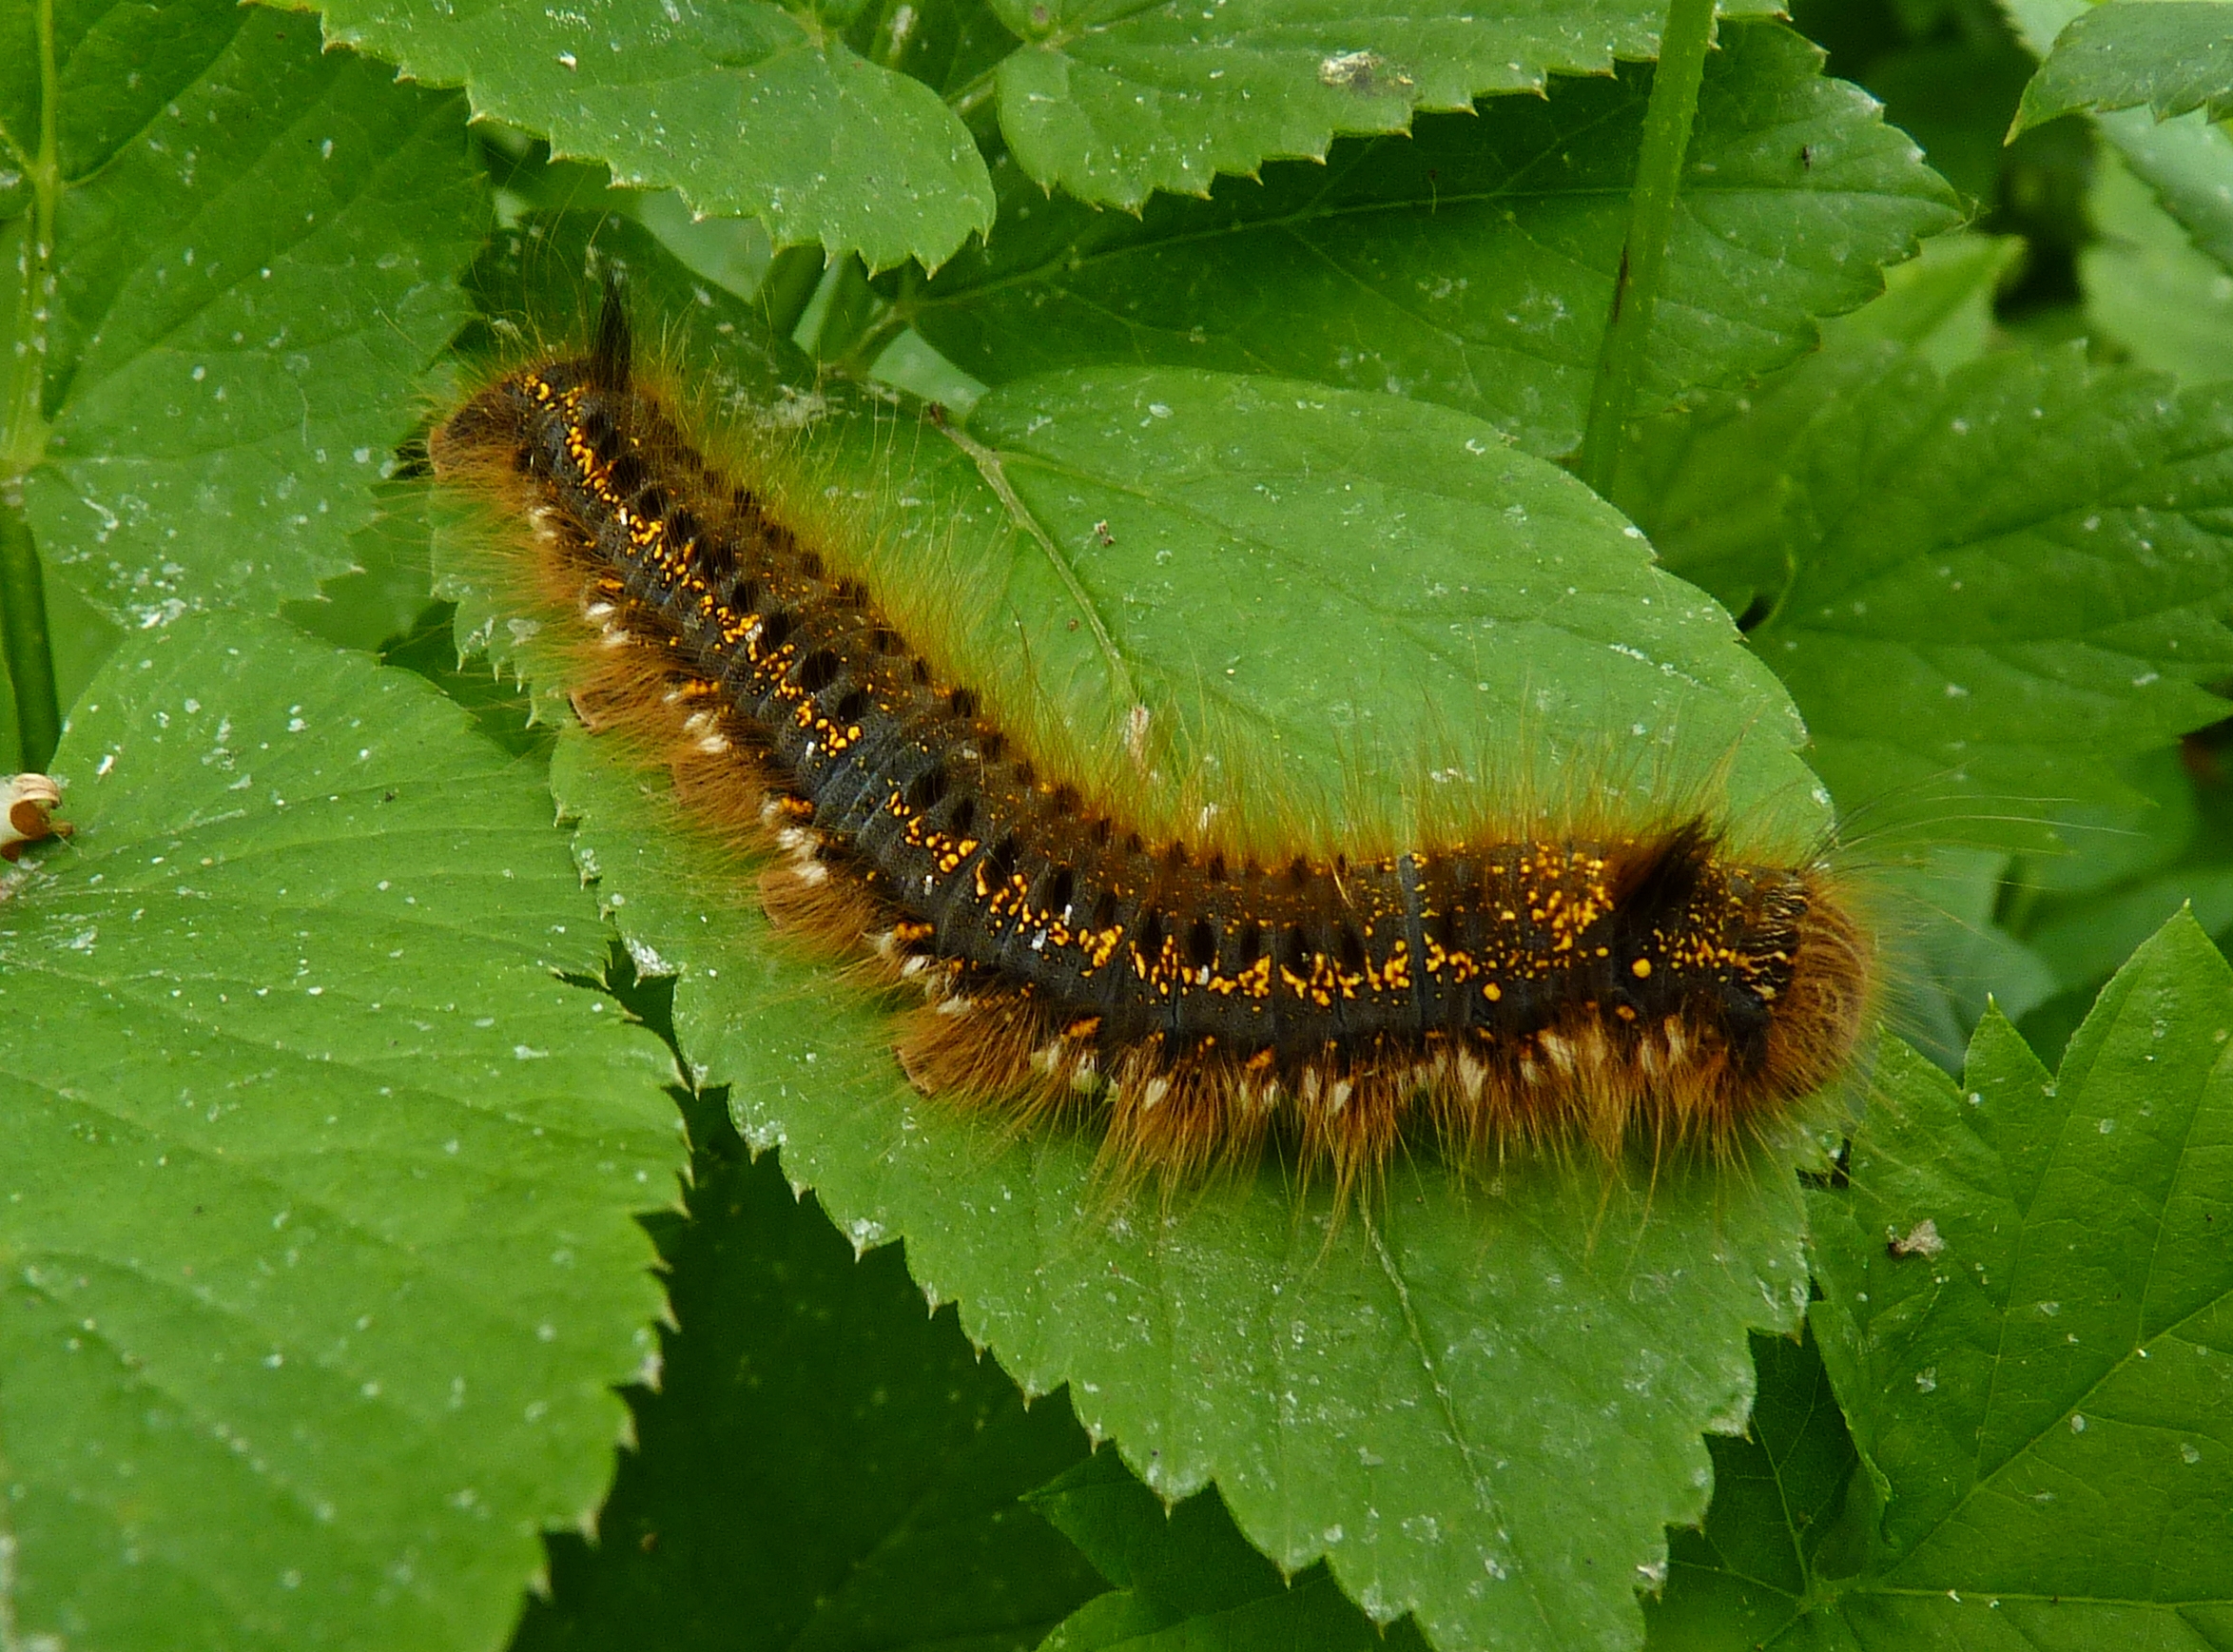 NaturePlus: Caterpillar ID please!